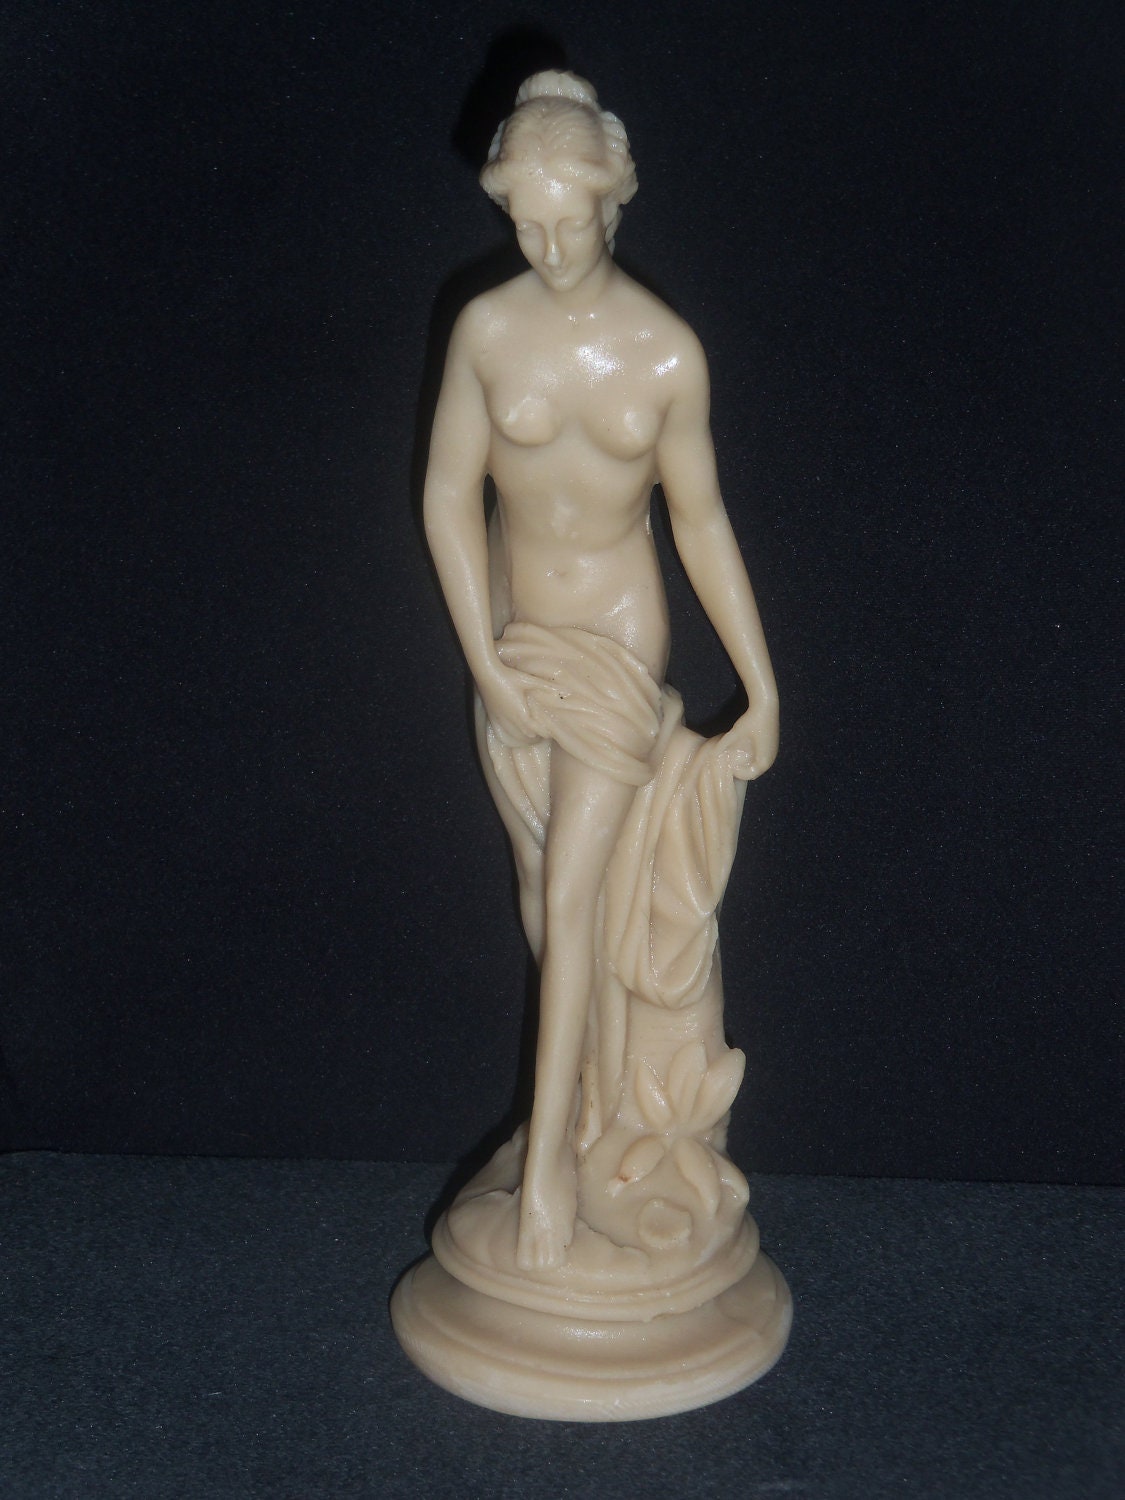 Greek Woman Sculpture